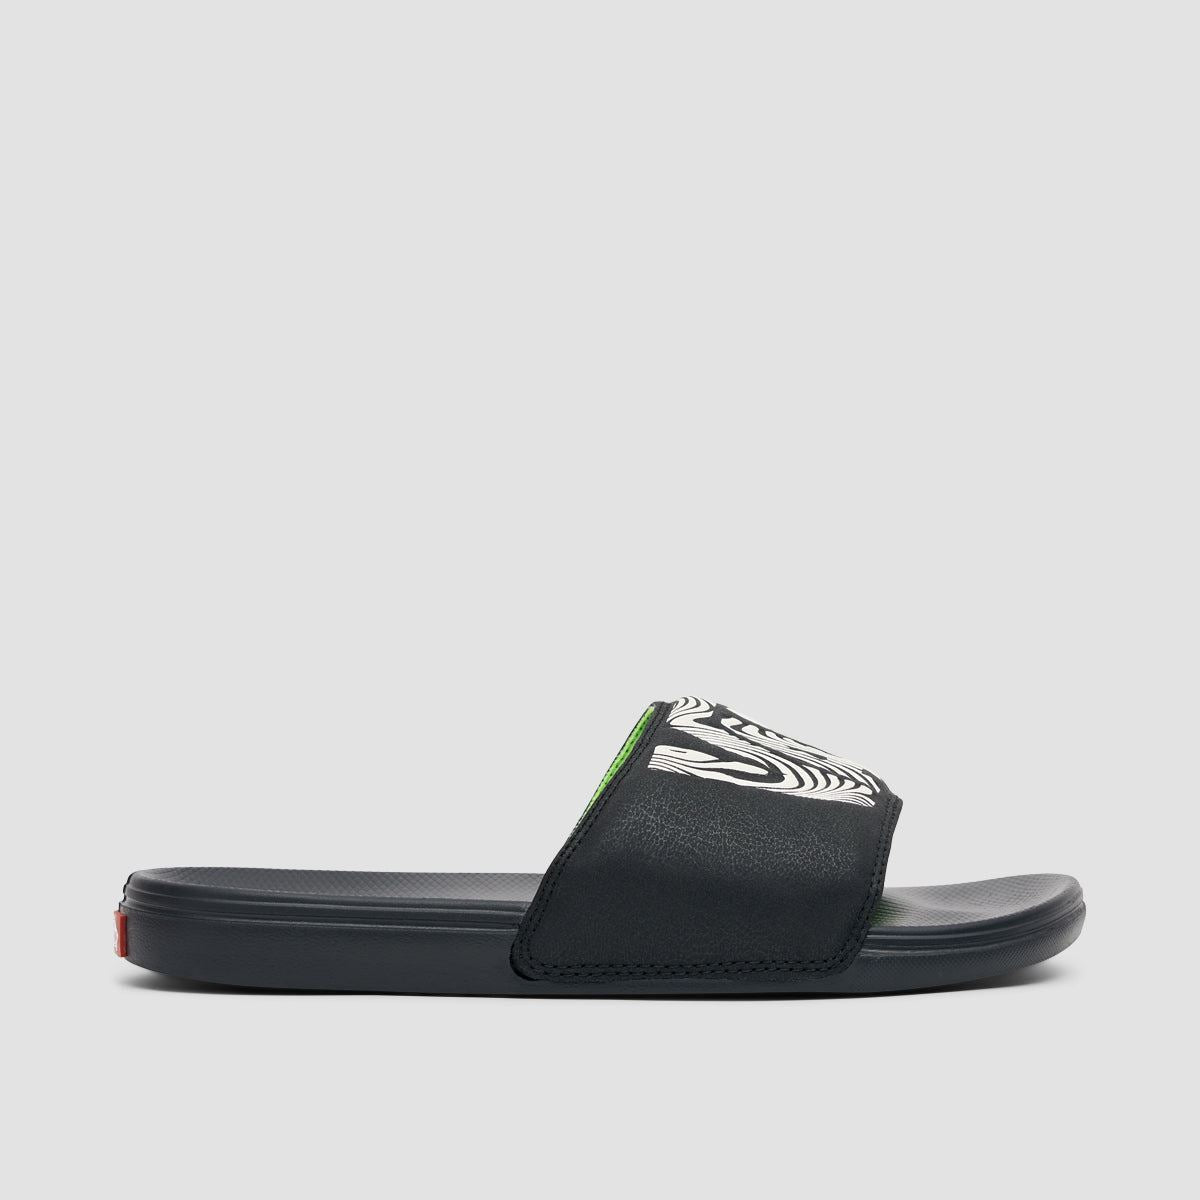 Vans La Costa Slide-On Sandals Trippy Grain Black/Black